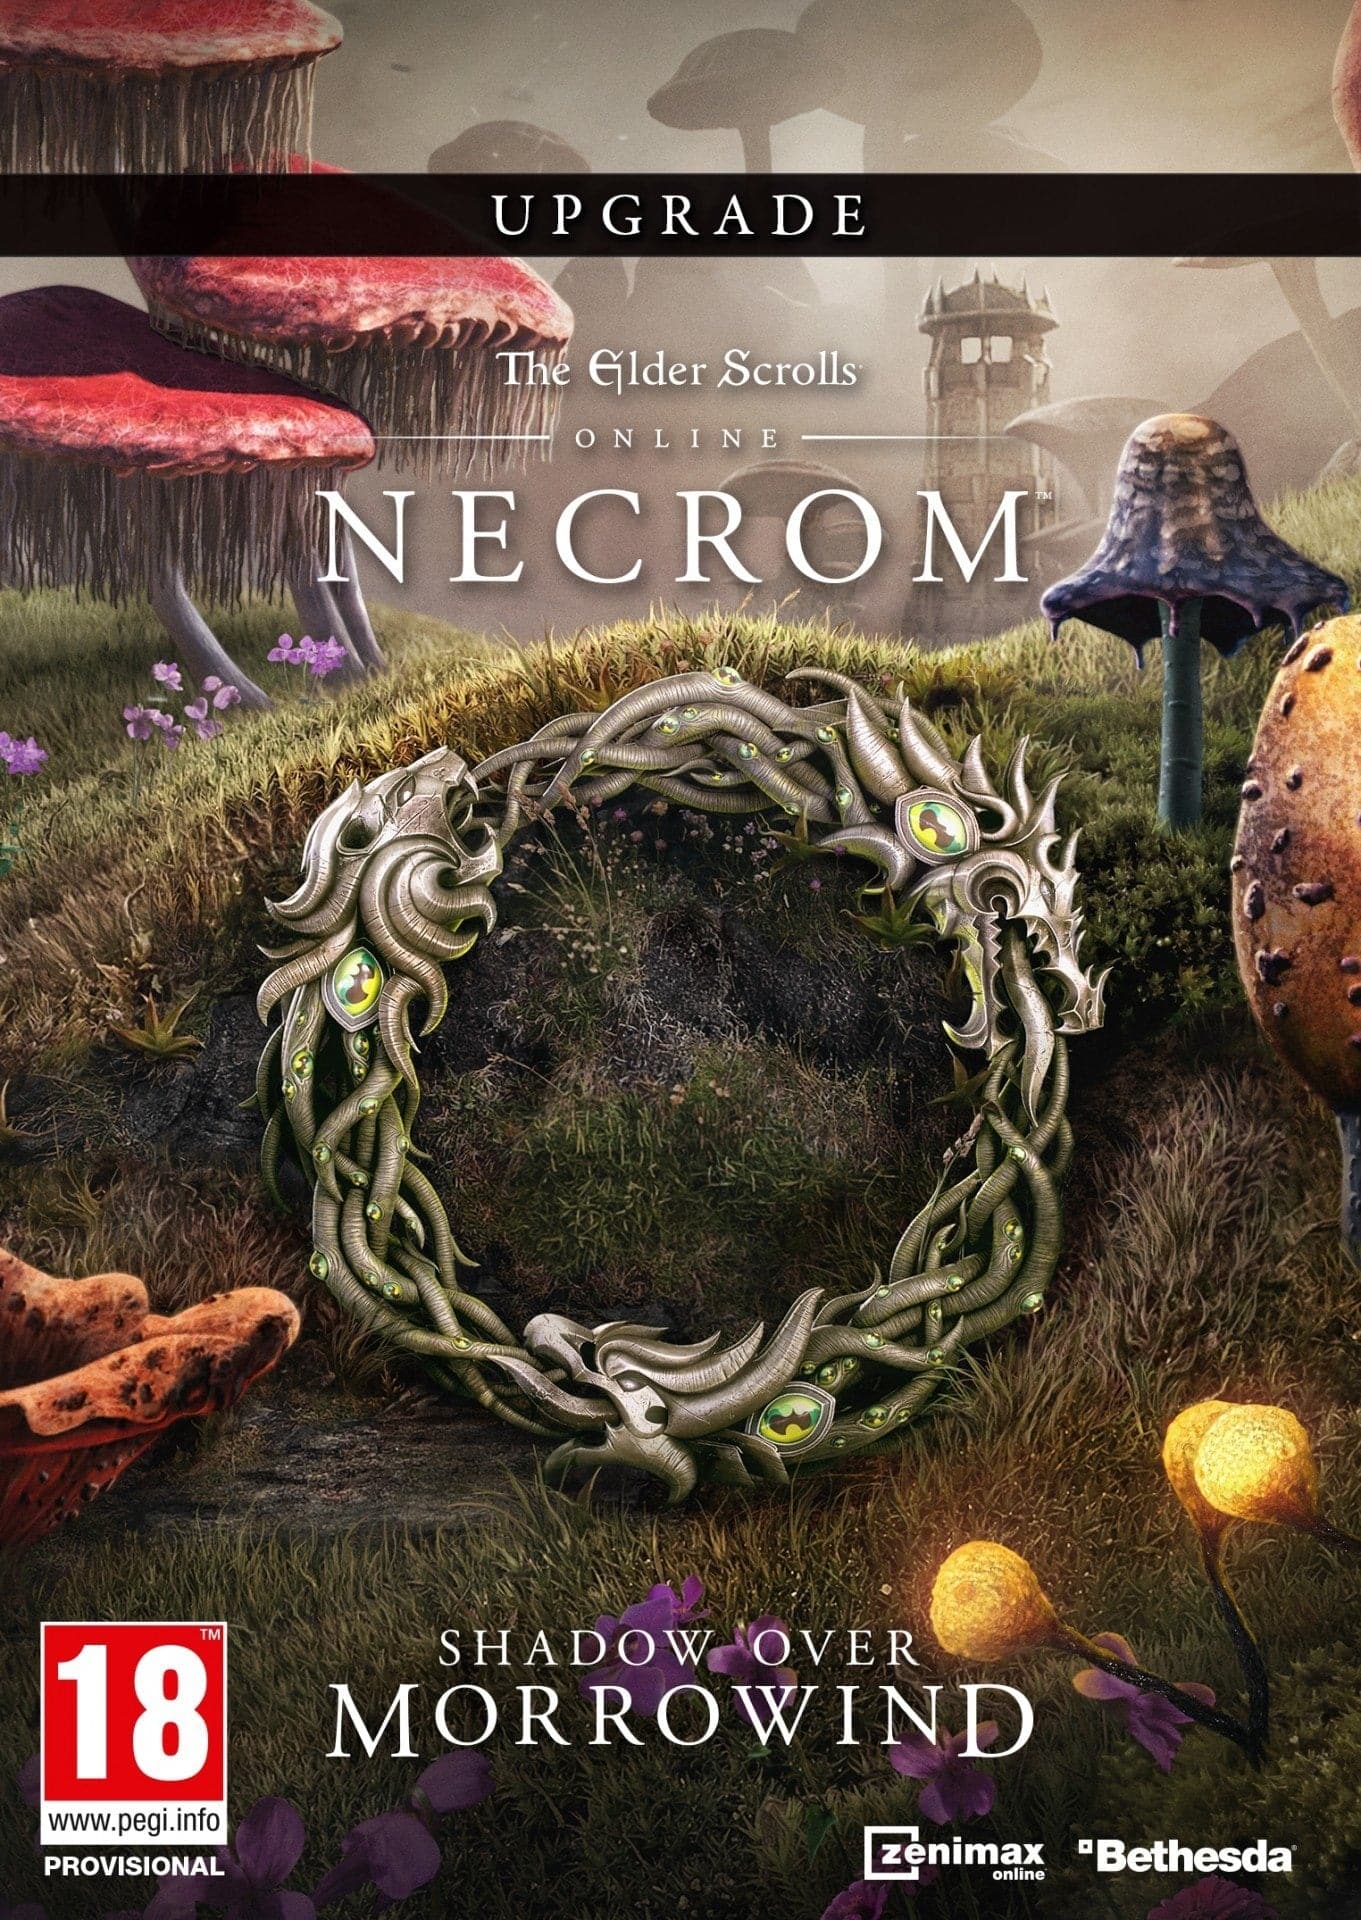 The Elder Scrolls Online: Upgrade: Necrom - למחשב